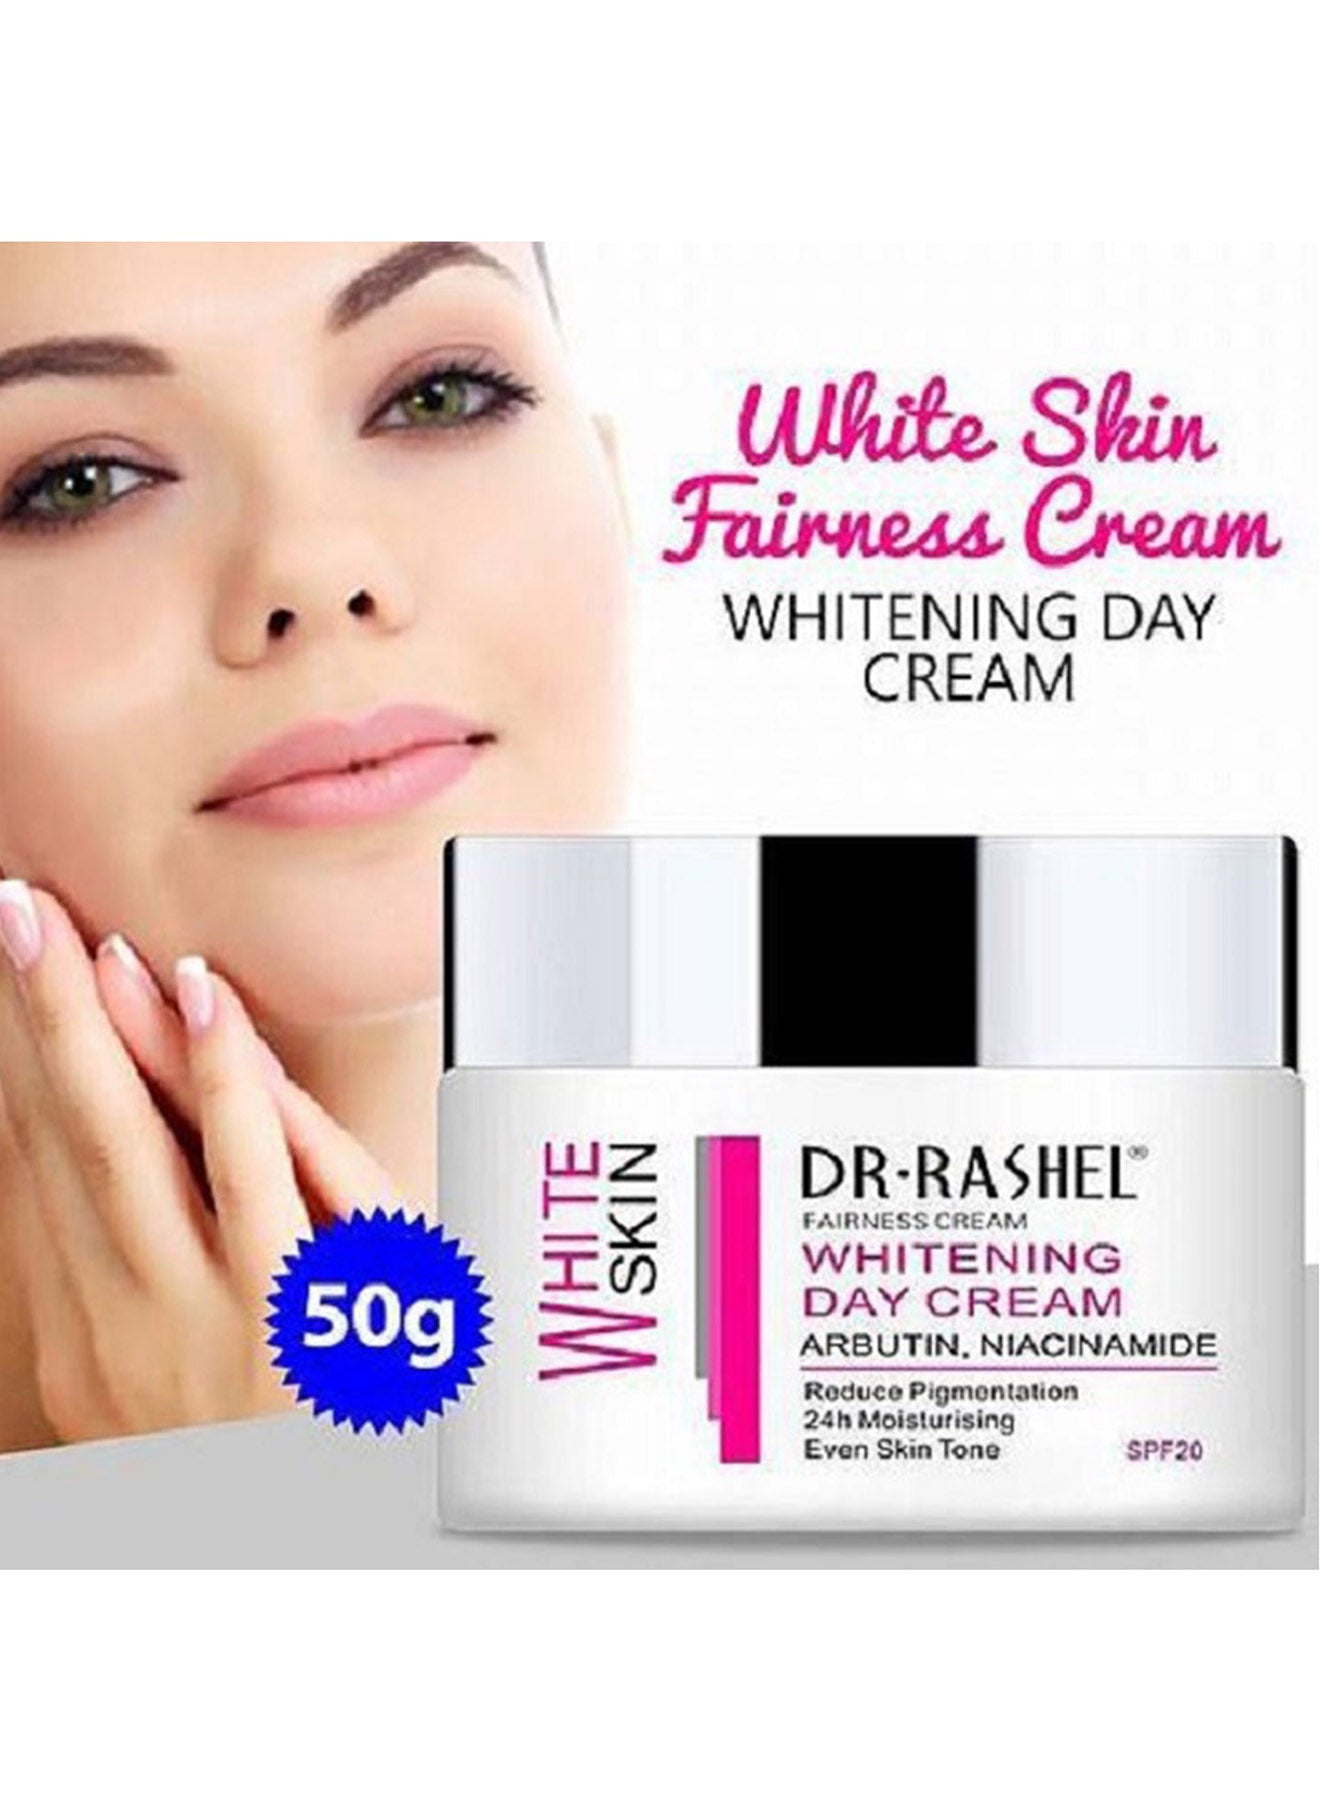 Dr Rashel White Skin Fade Spots Night Cream 50g